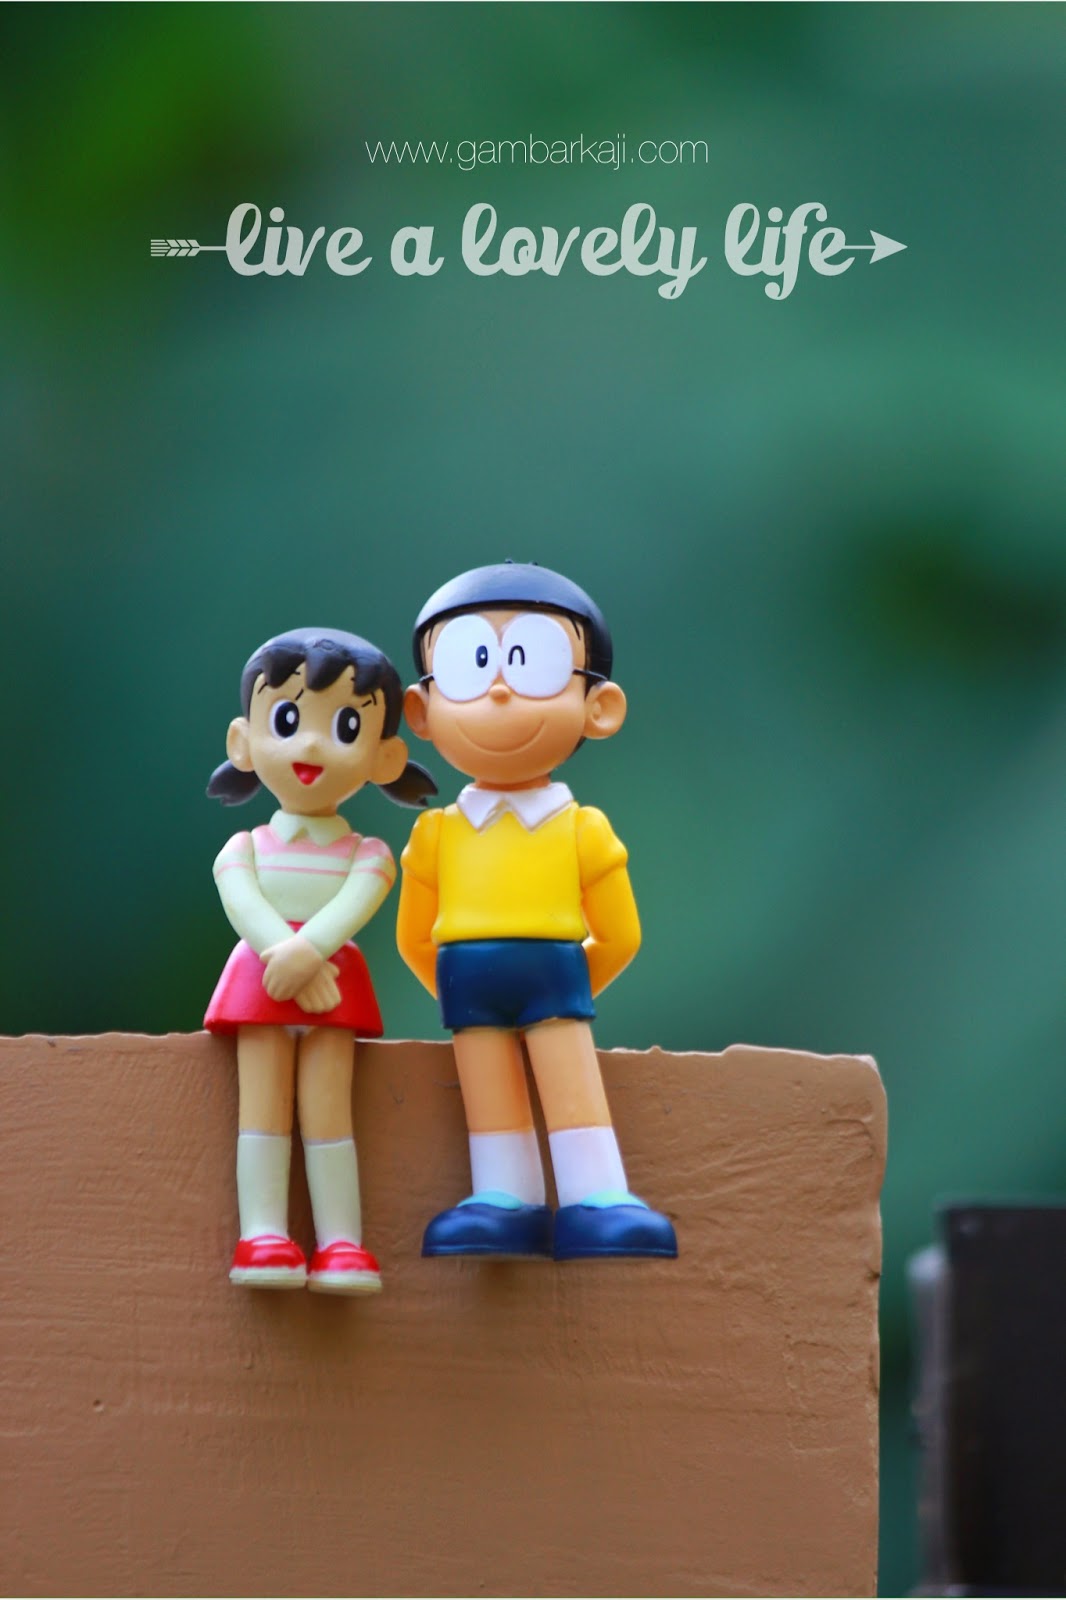 nobita shizuka love fondos de escritorio,dibujos animados,figurilla,dibujos animados,amistad,juguete